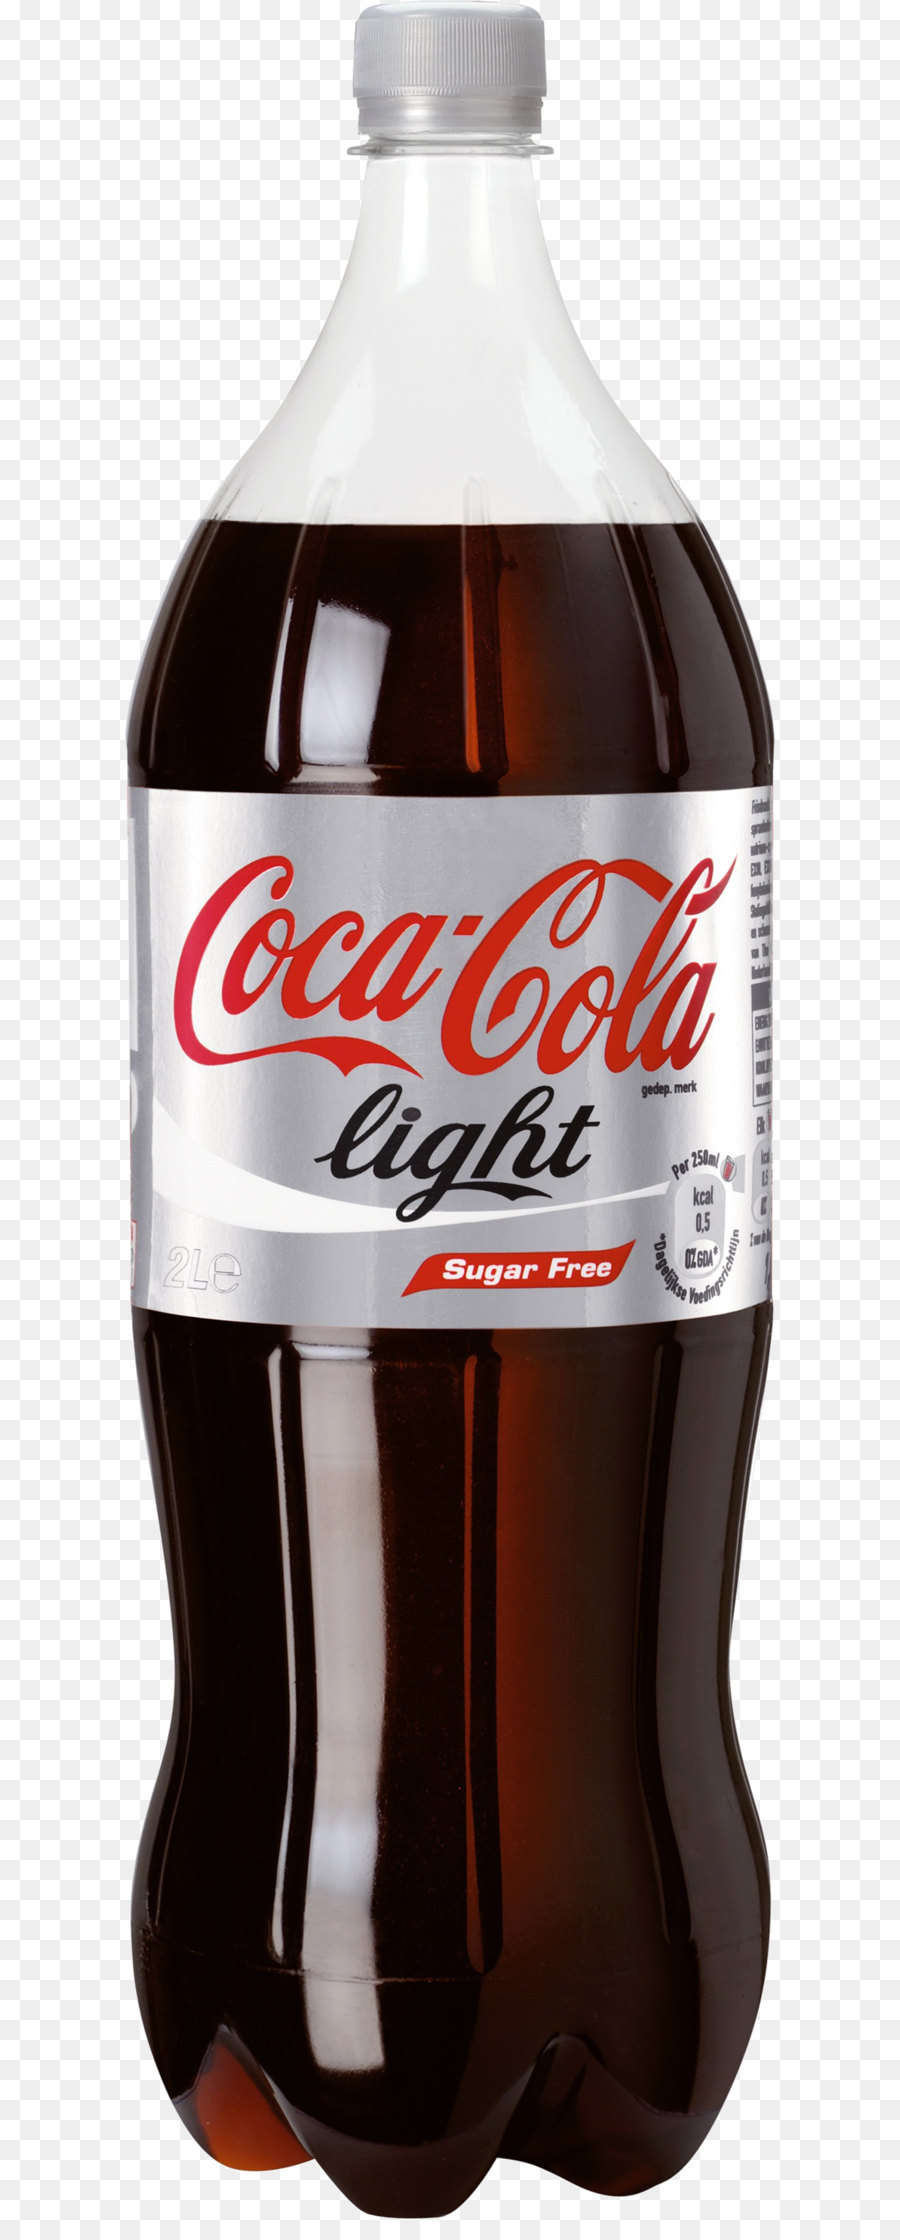 Coca-Cola Soft drink Sprite Zero Diet Coke - Coca Cola bottle PNG image png download - 994*3395 - Free Transparent Coca Cola png Download.